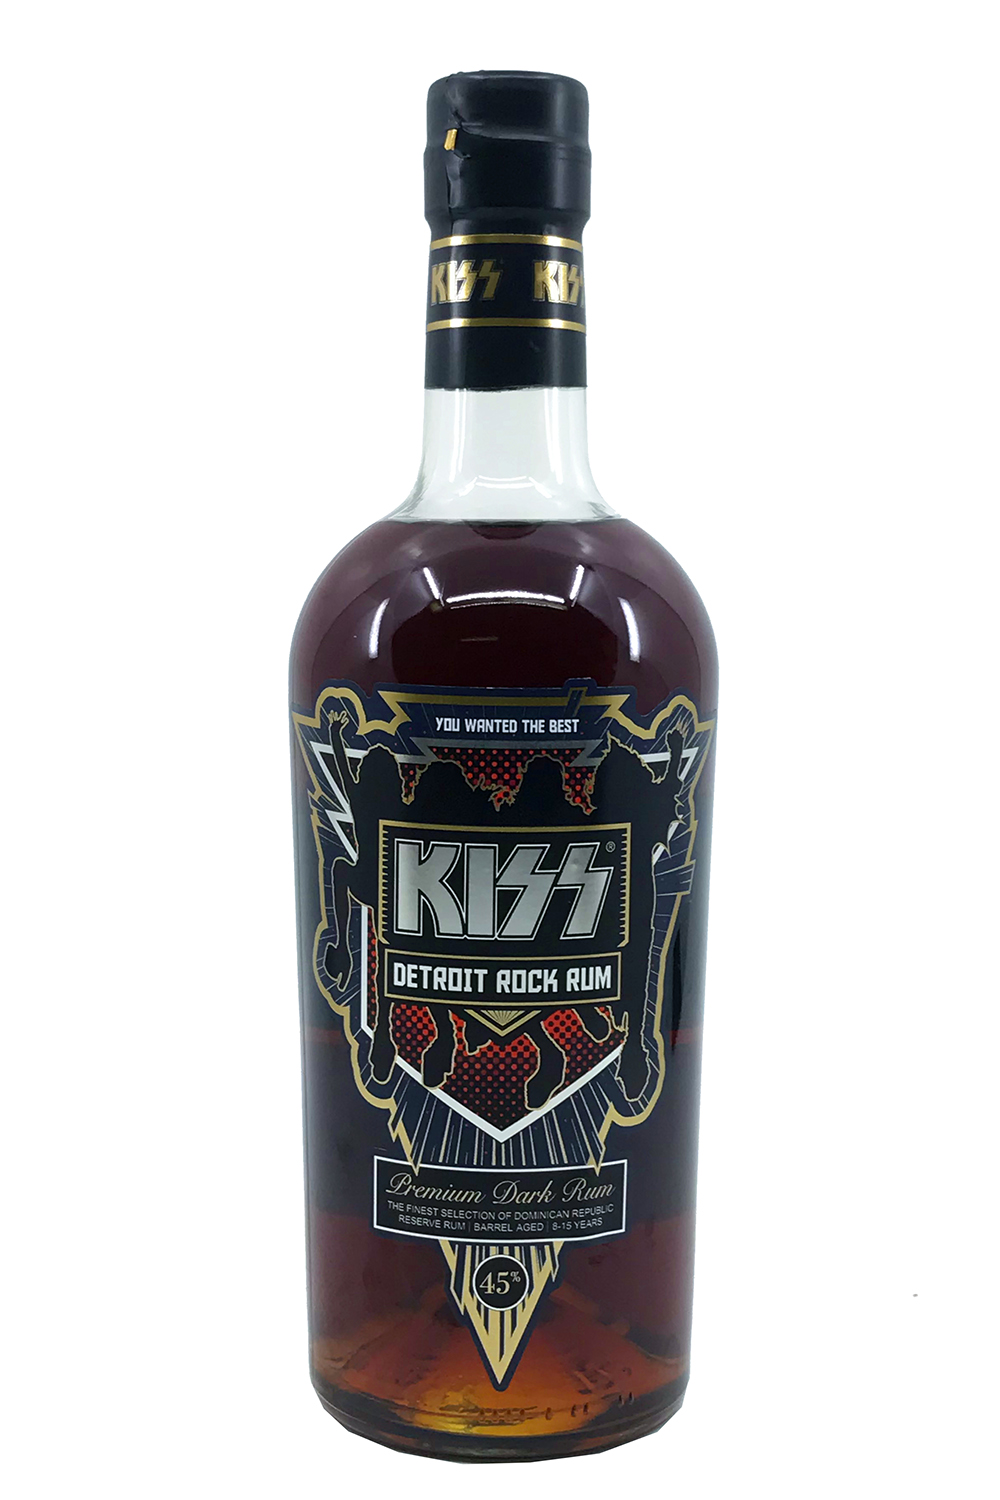 KISS - Detroit Rock Rum - Premium Dark Rum 0,7l 45%vol.